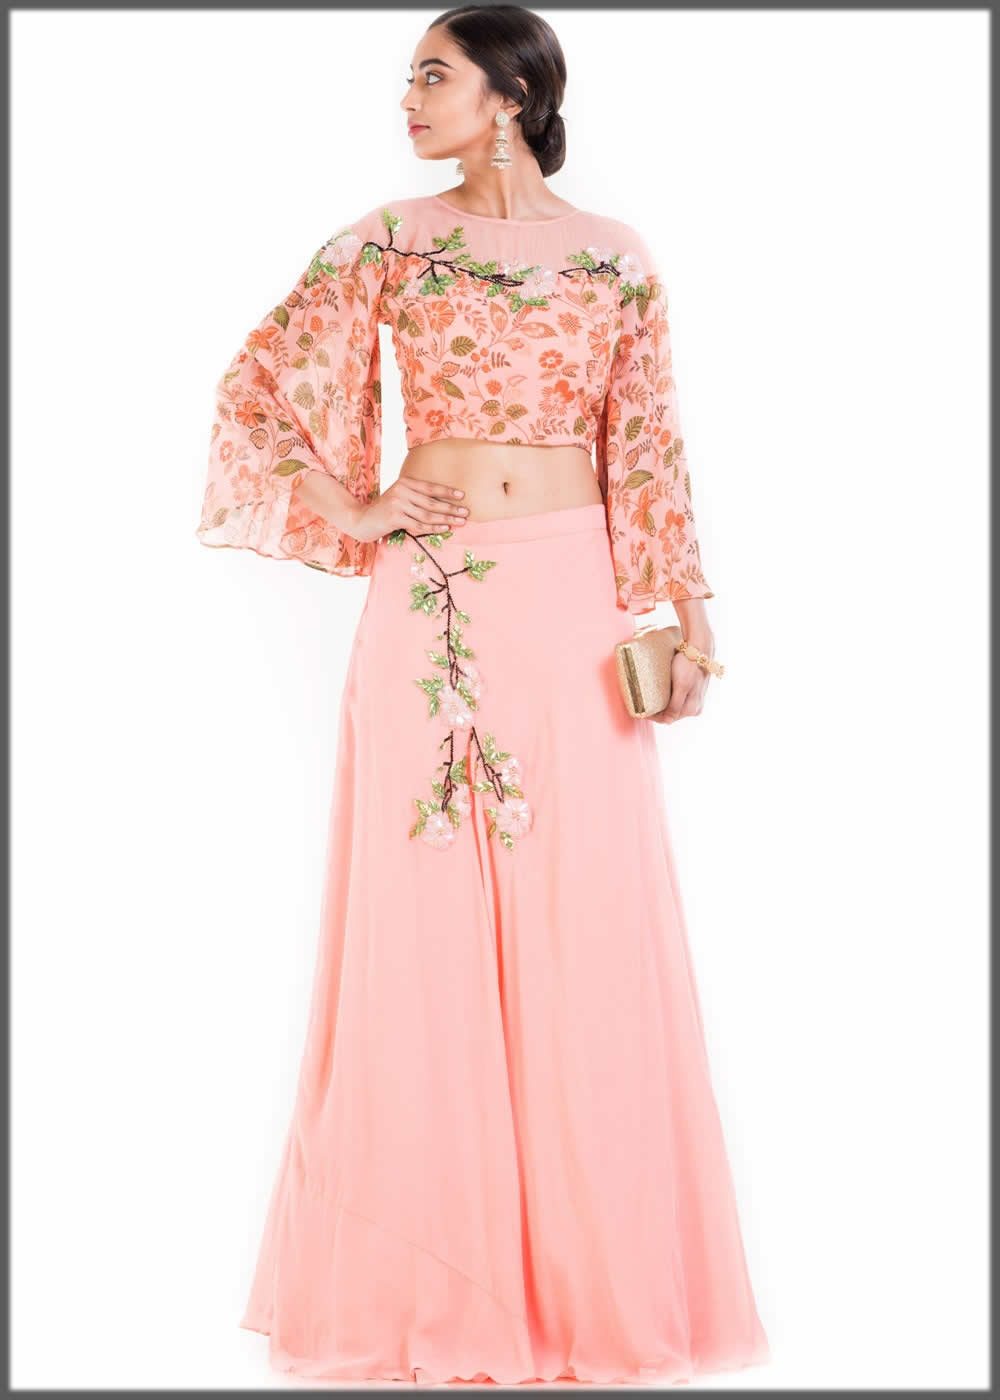 Top Crop Dresses in pink floral